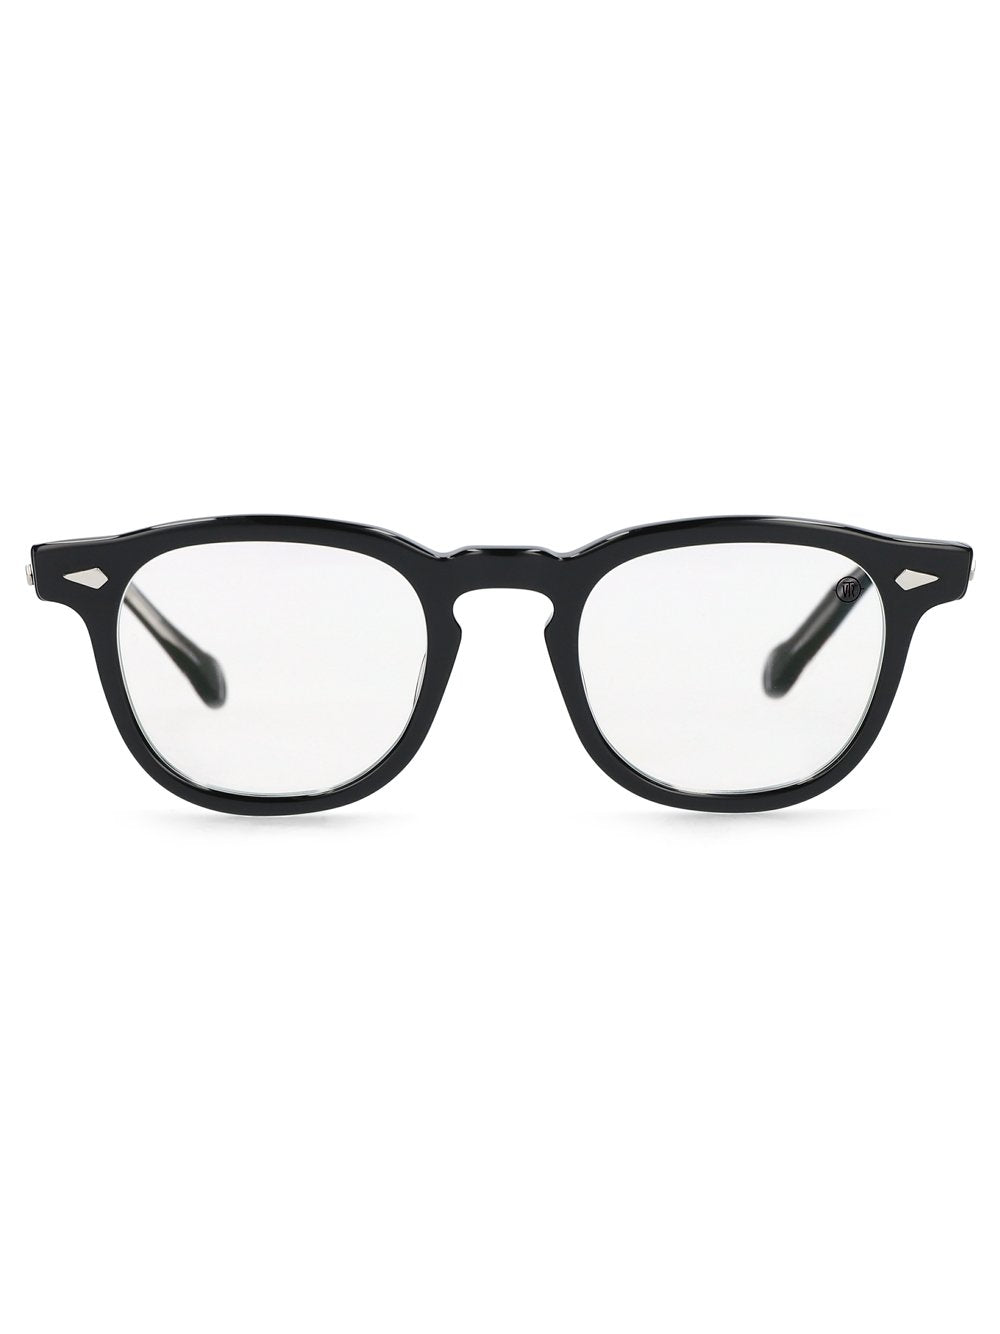 TVR Unisex Acetate Glasses & Frames 